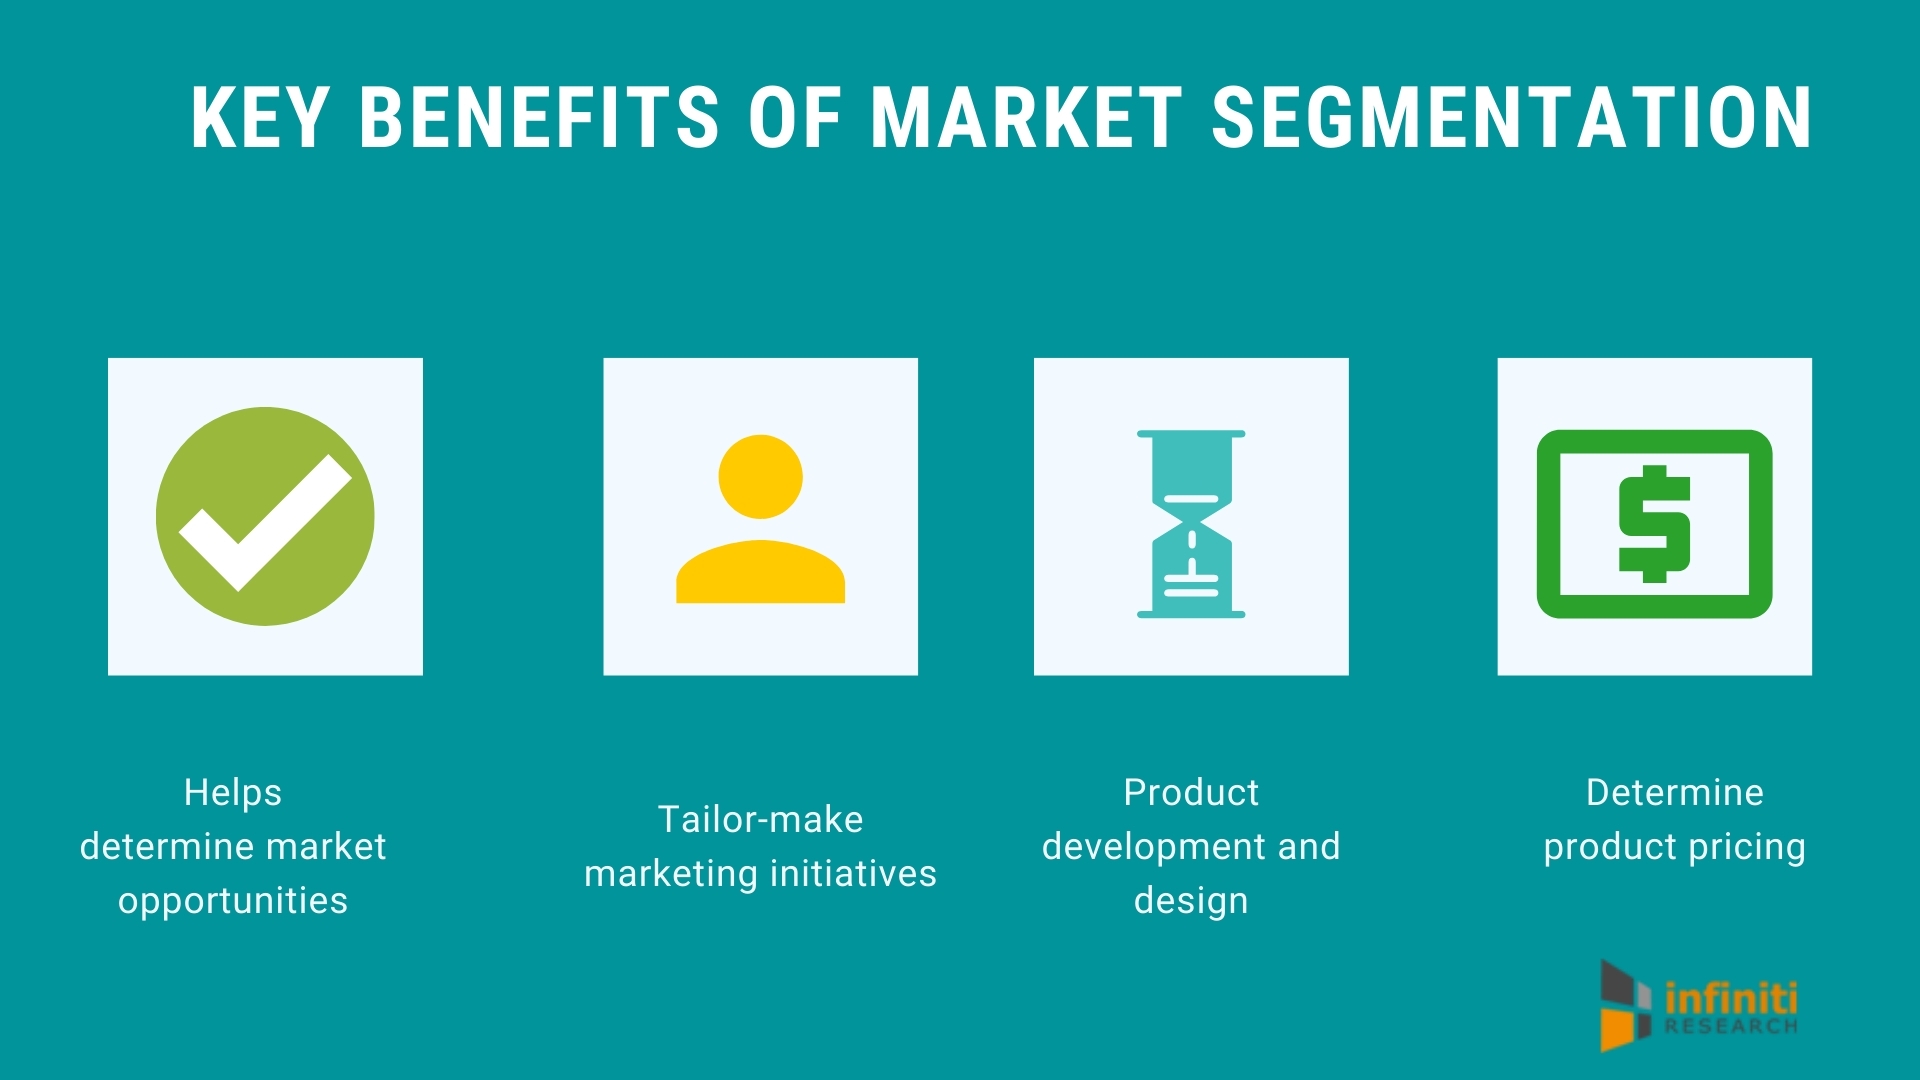 What companies use market segmentation?